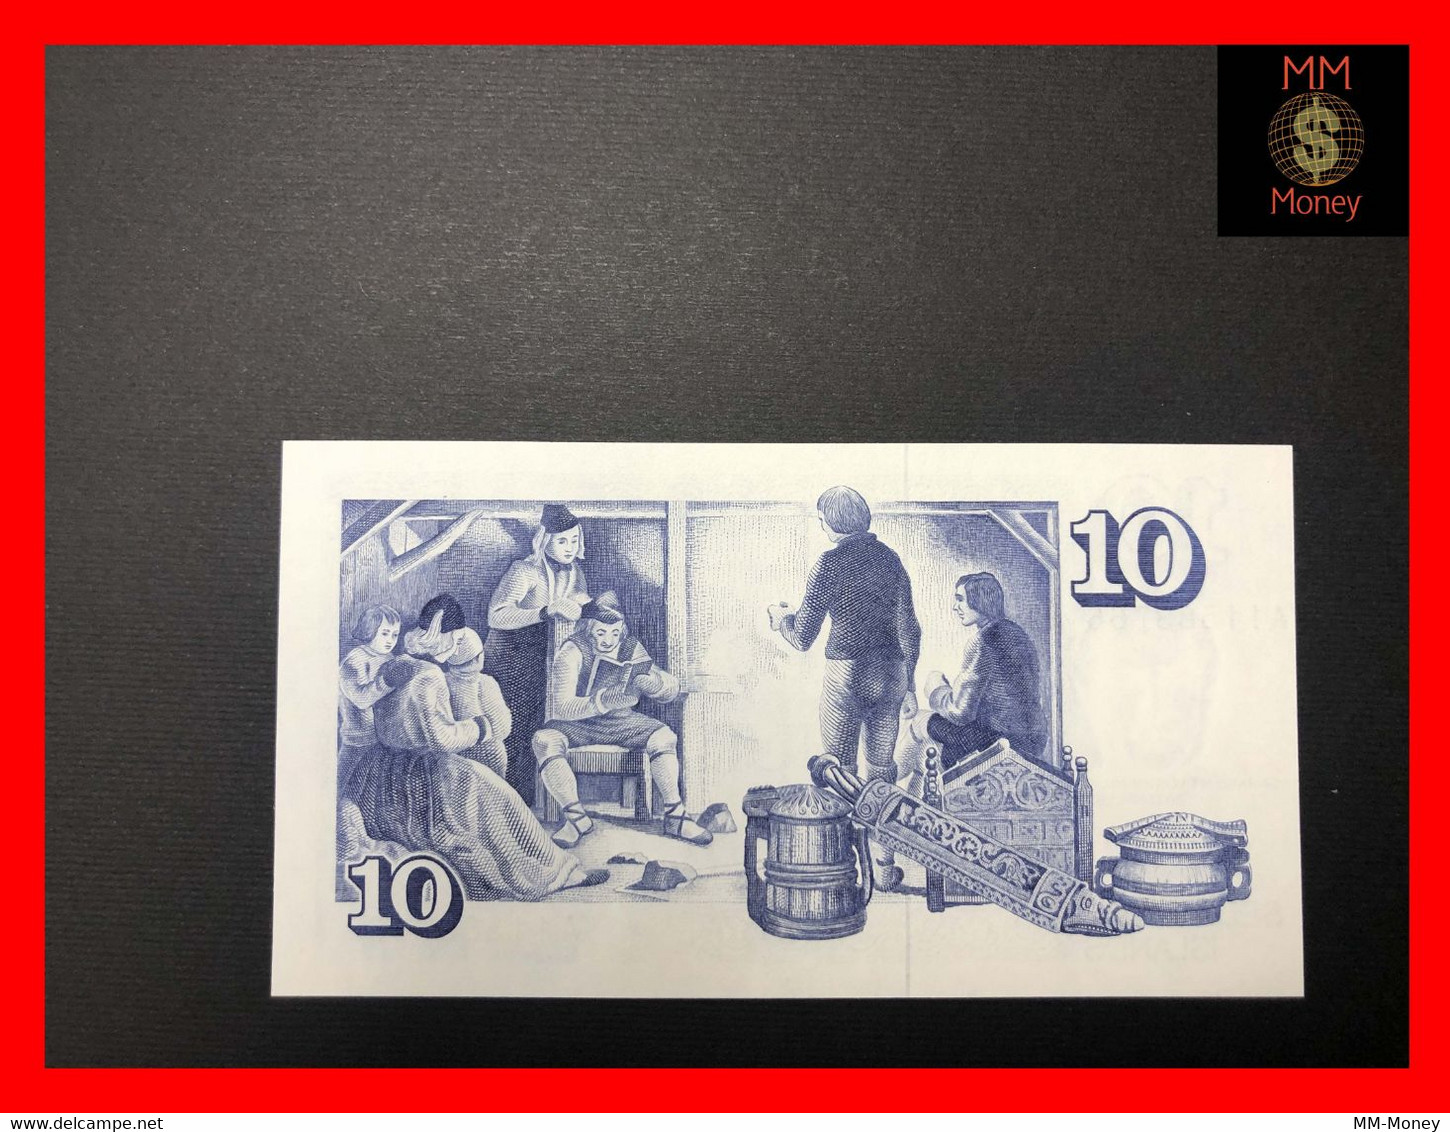 ICELAND  10 Kronur L. 29.3.1961  P. 48  Issued 1981  "sig.  Olafsson - Nordal"   UNC     [MM-Money] - Islandia